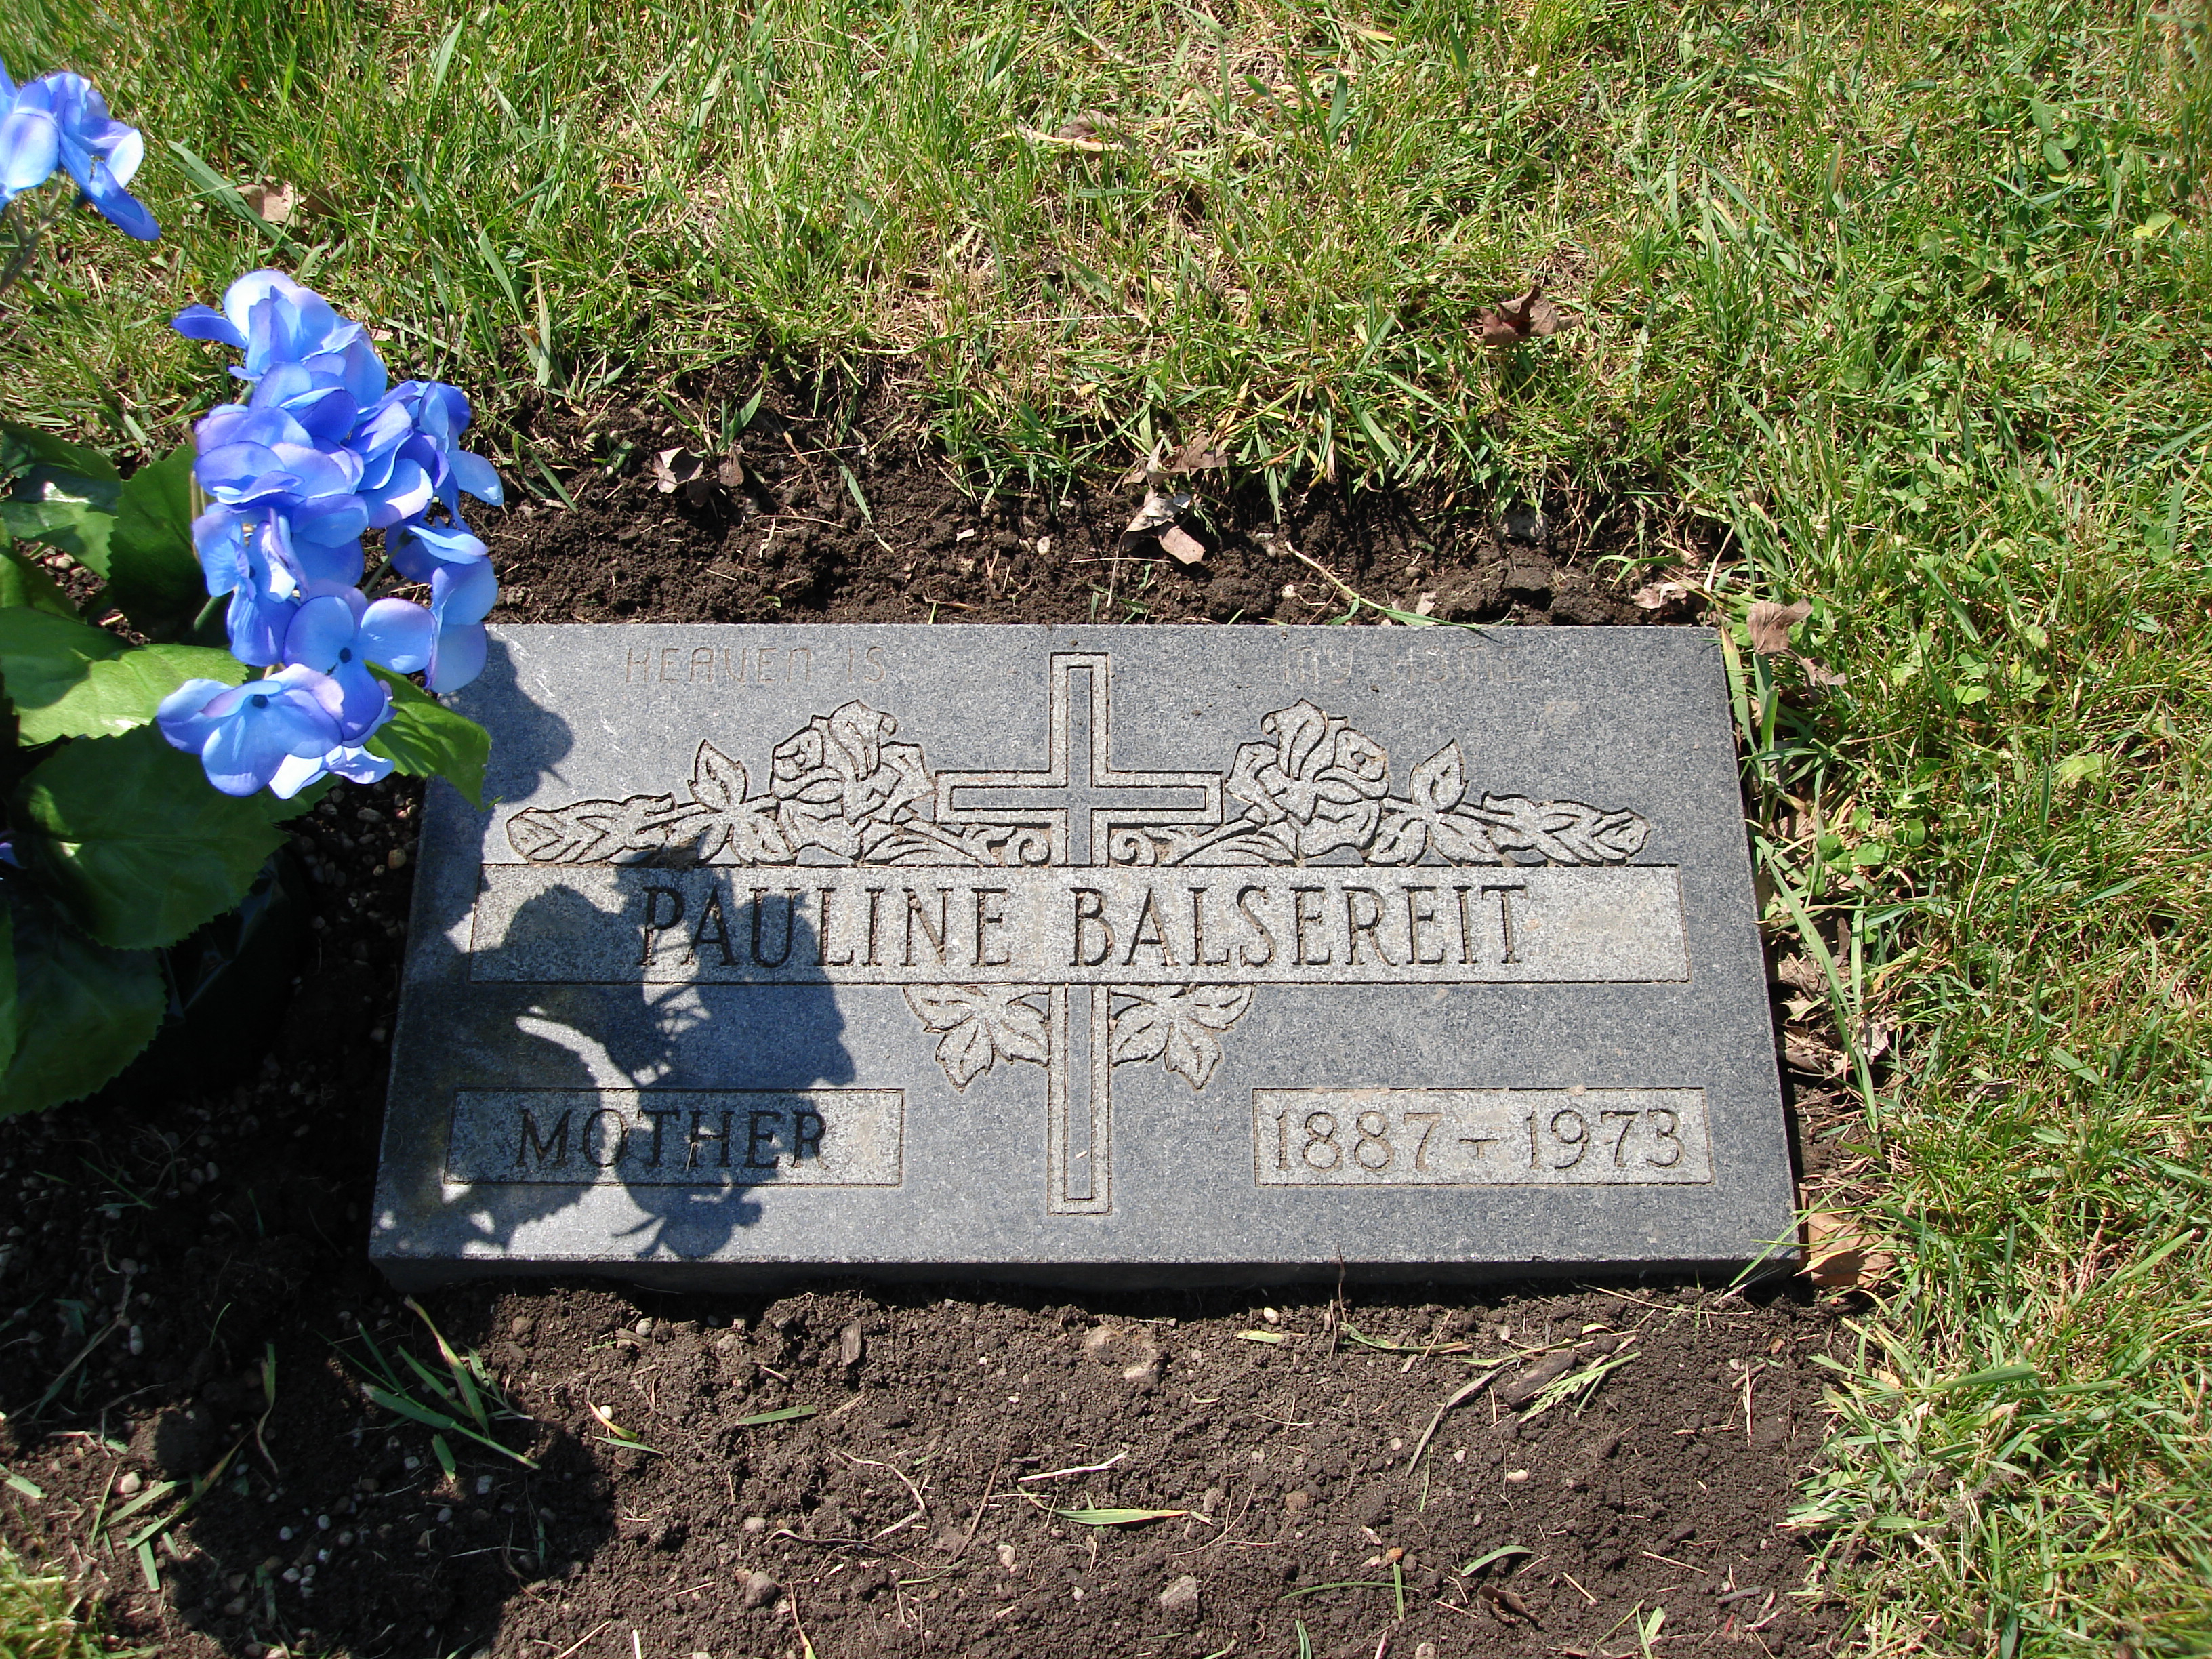 Pauline Balsereit Gravesite